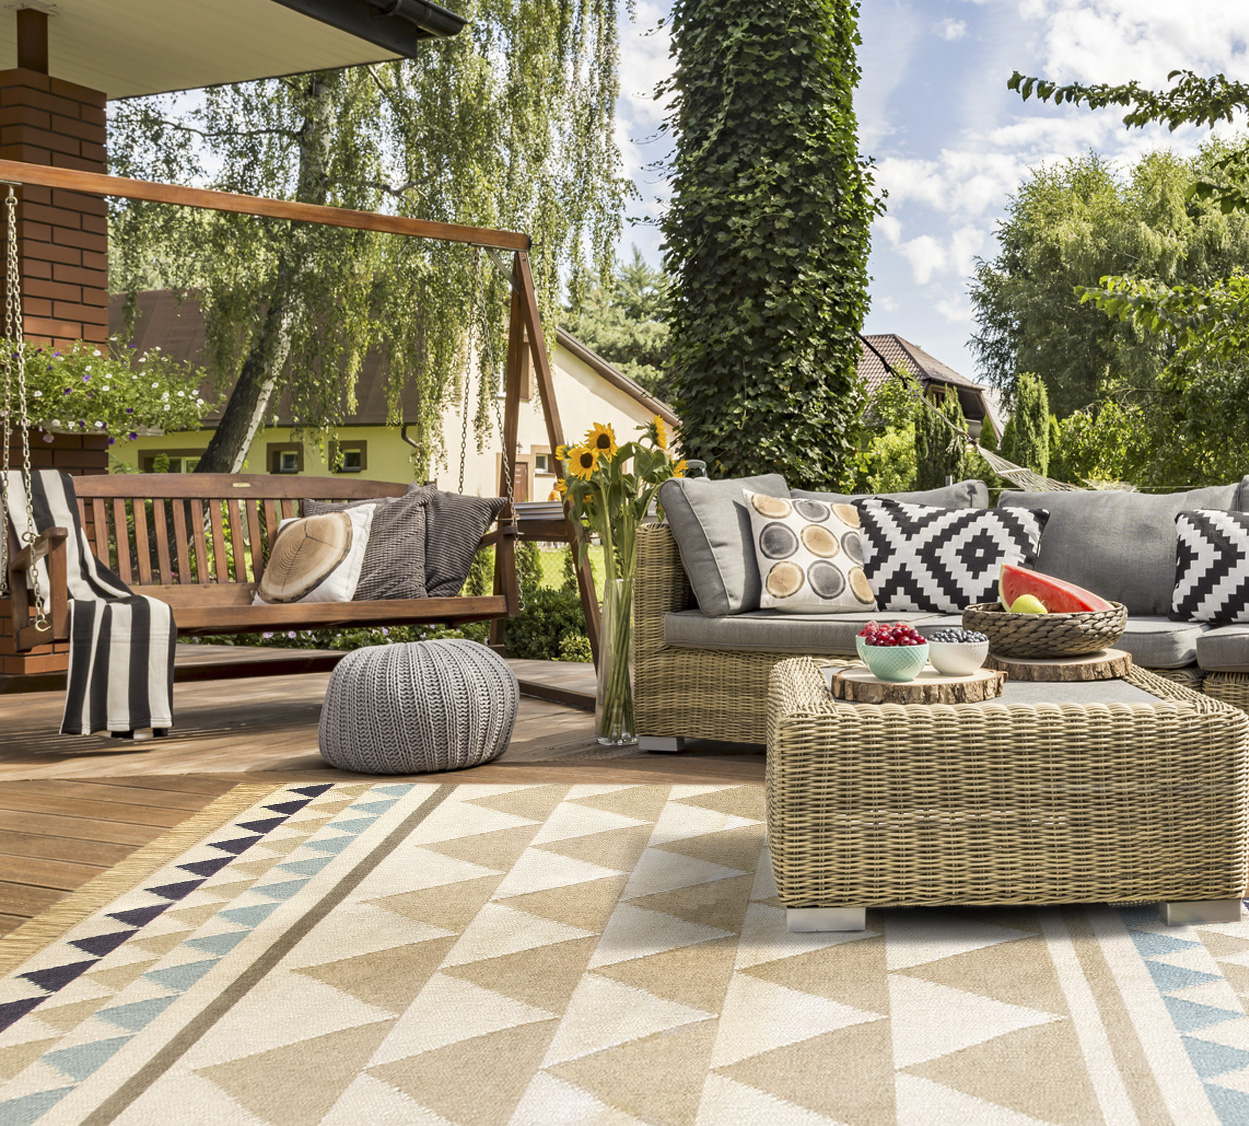 Cómo elegir una alfombra de exterior para la terraza? - El blog de Alfombras  Hamid